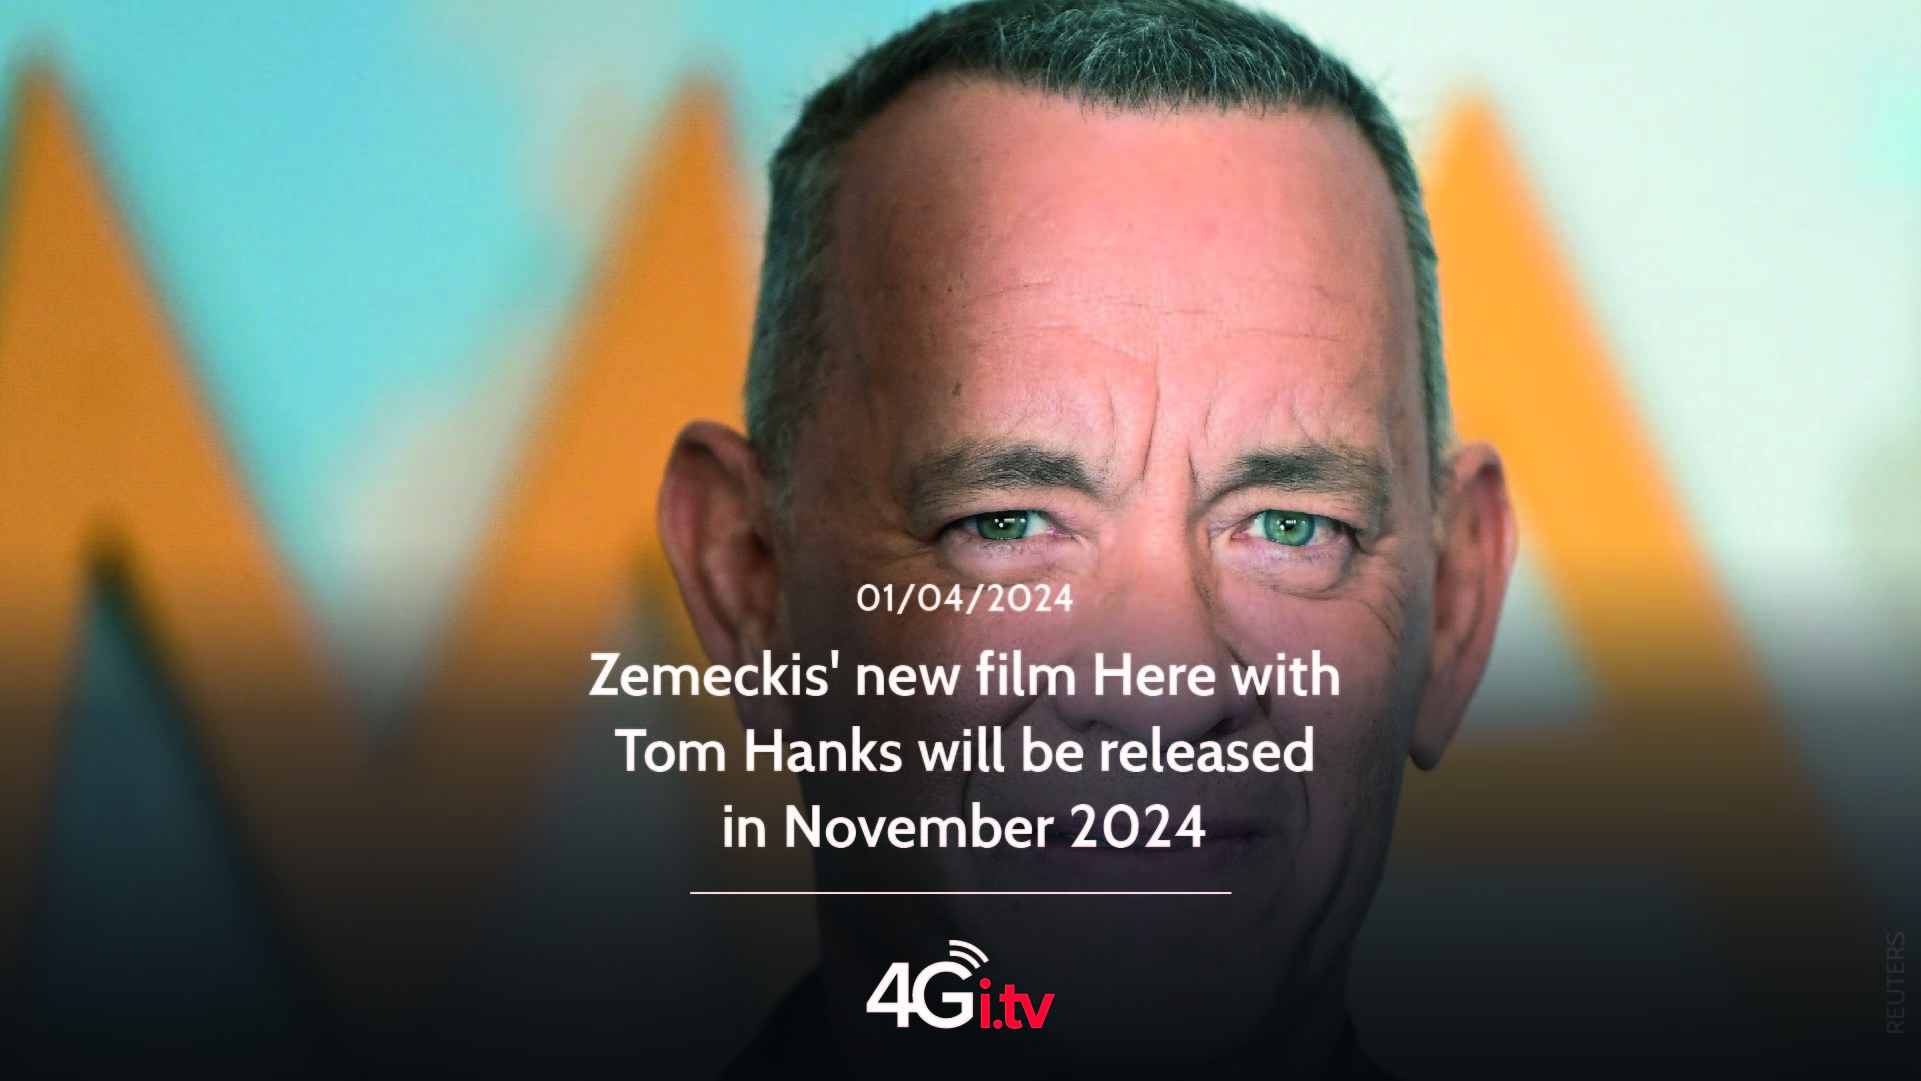 Lesen Sie mehr über den Artikel Zemeckis’ new film Here with Tom Hanks will be released in November 2024 